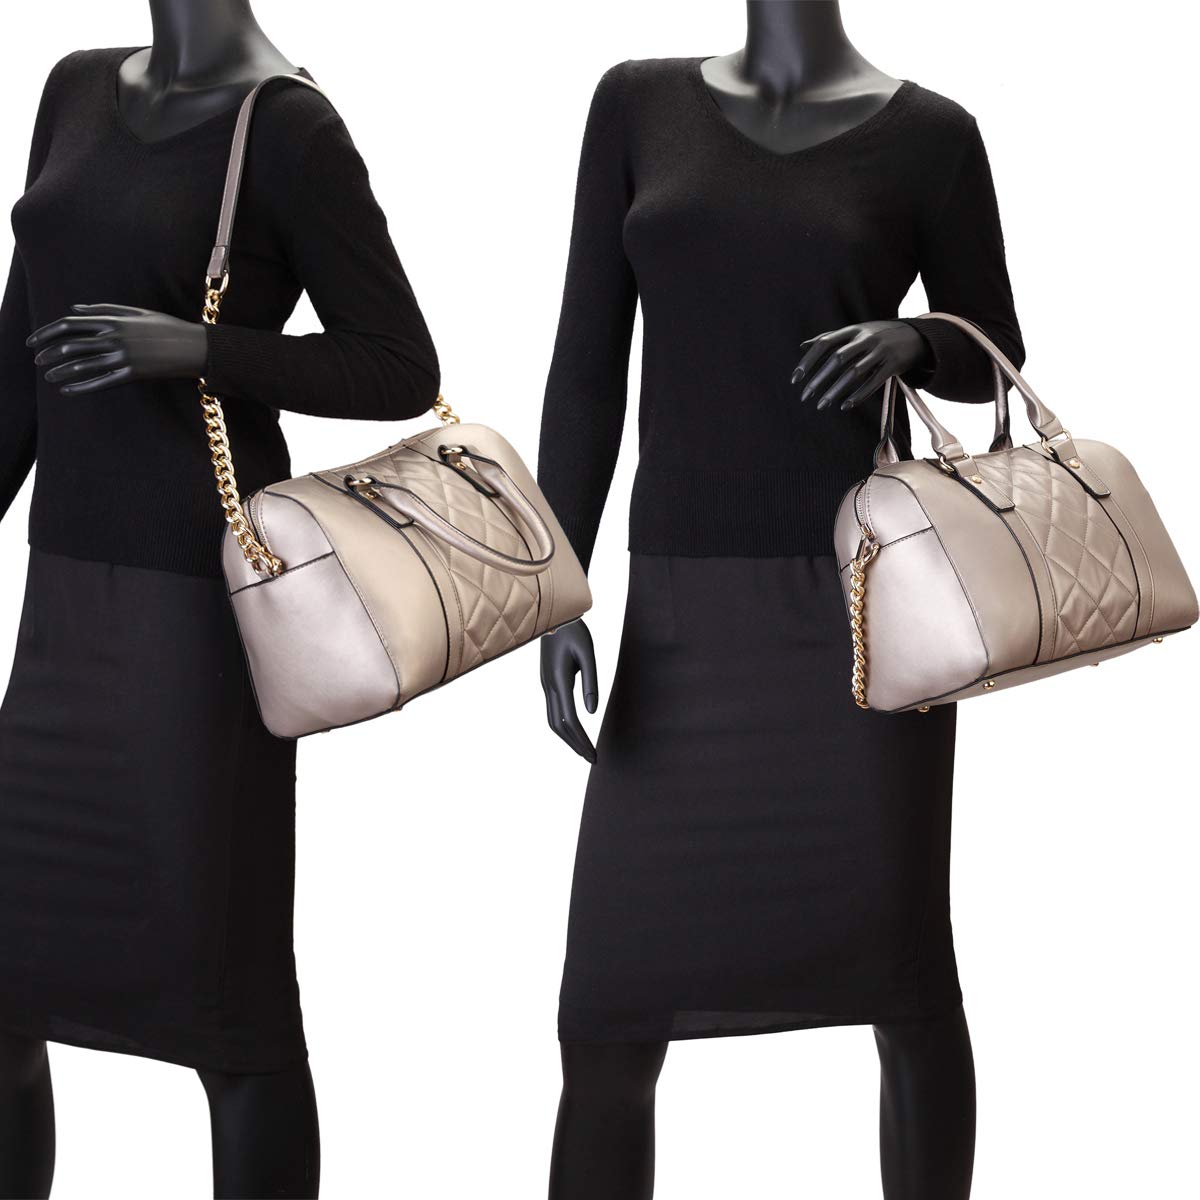 Dasein Women Vegan Leather Barrel Bags Satchel Handbags Shoulder Purse Large Top Handle Tote 2pcs Set